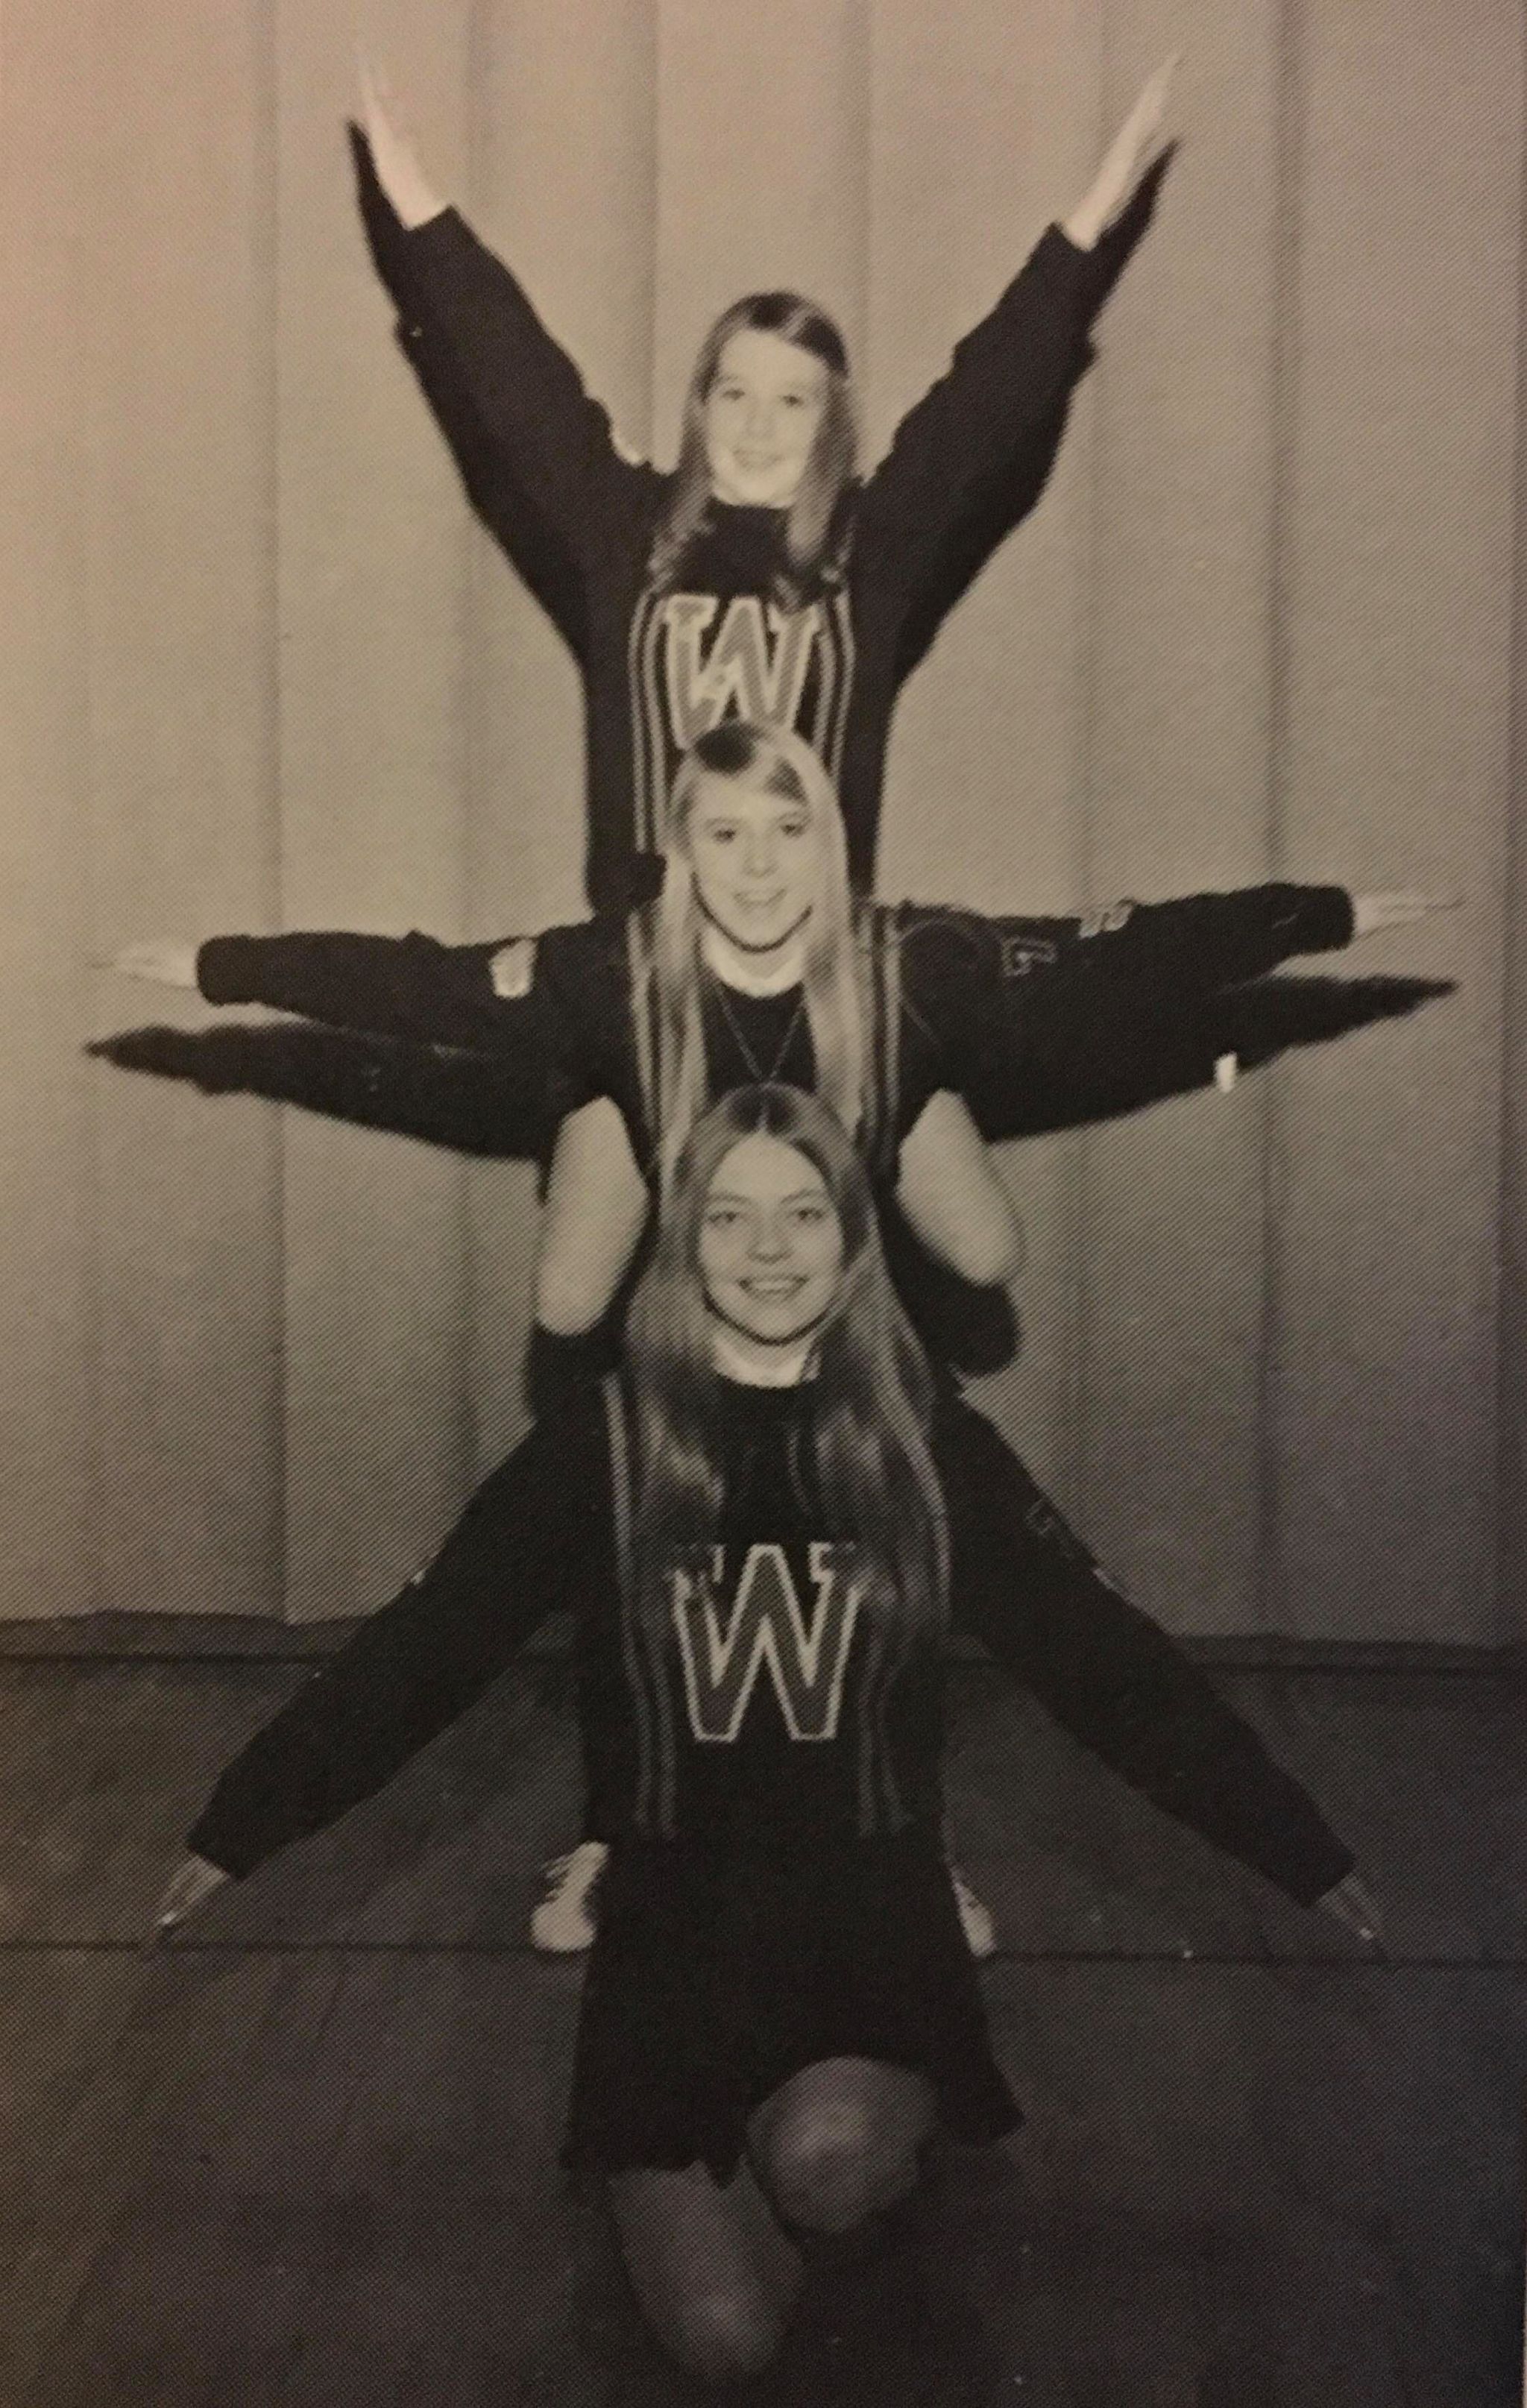 Cheerleaders: Top to Bottom: Barbra Bedsend, Jeanne Woychik, Emily Christopherson.